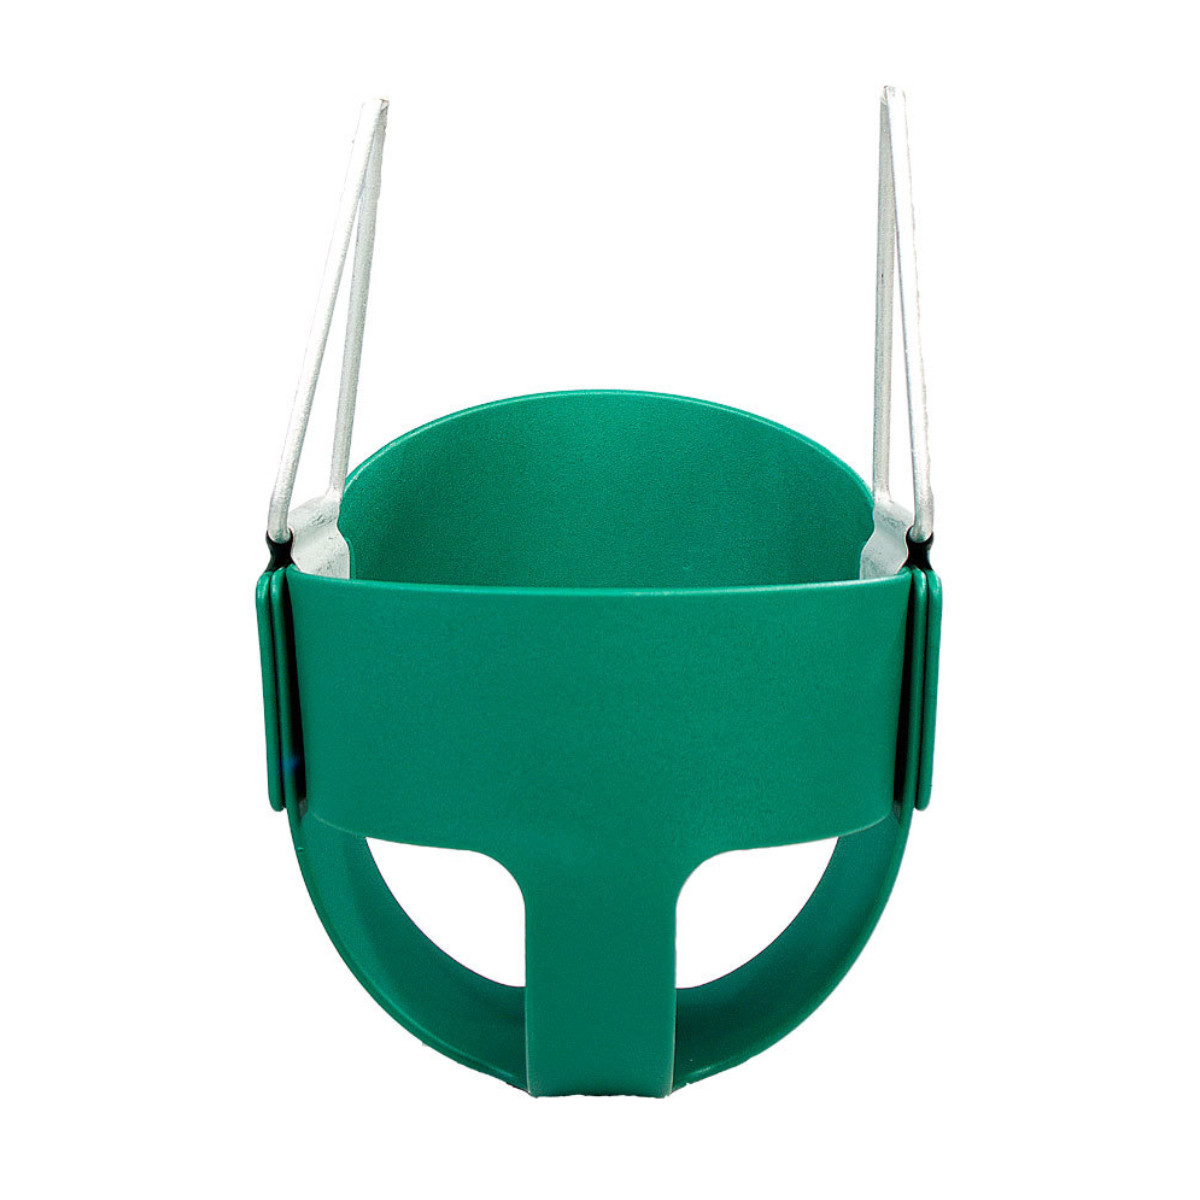 CoPoly Full Bucket Swing Seat - Green (S-26R)